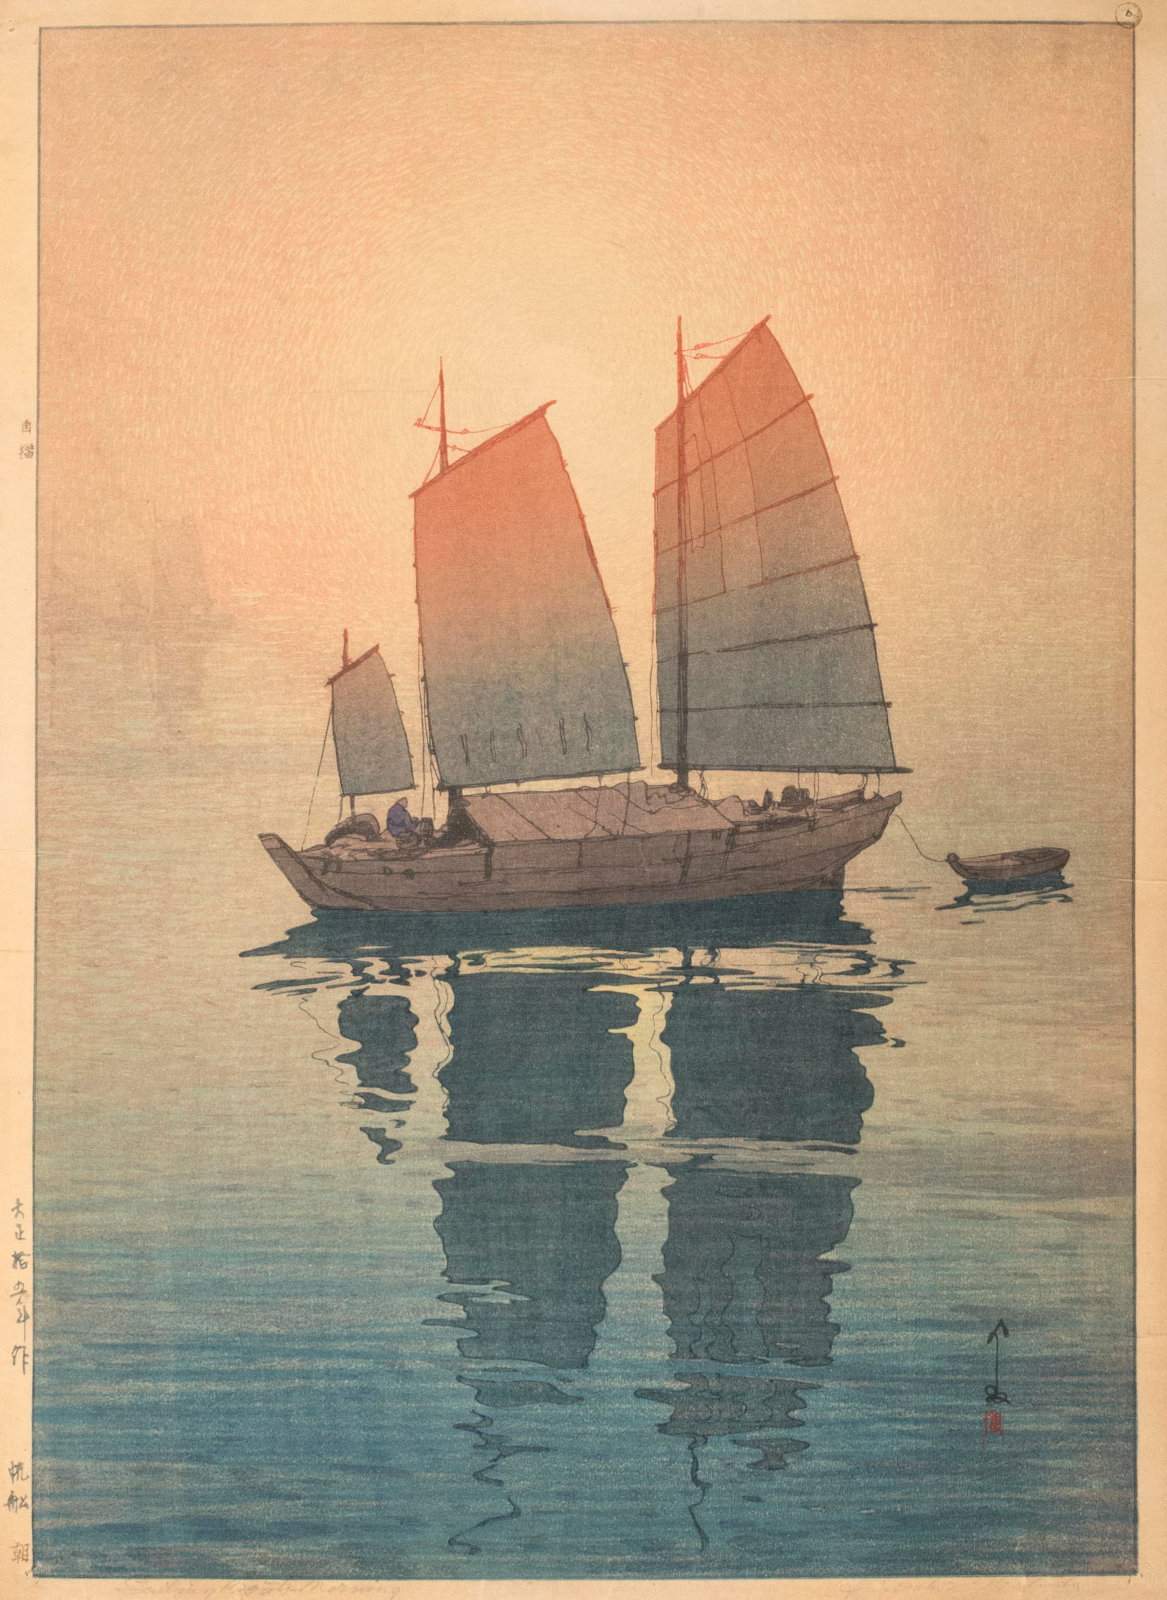 Hiroshi Yoshida “Sailing Boats, Morning” 1926 woodblock print